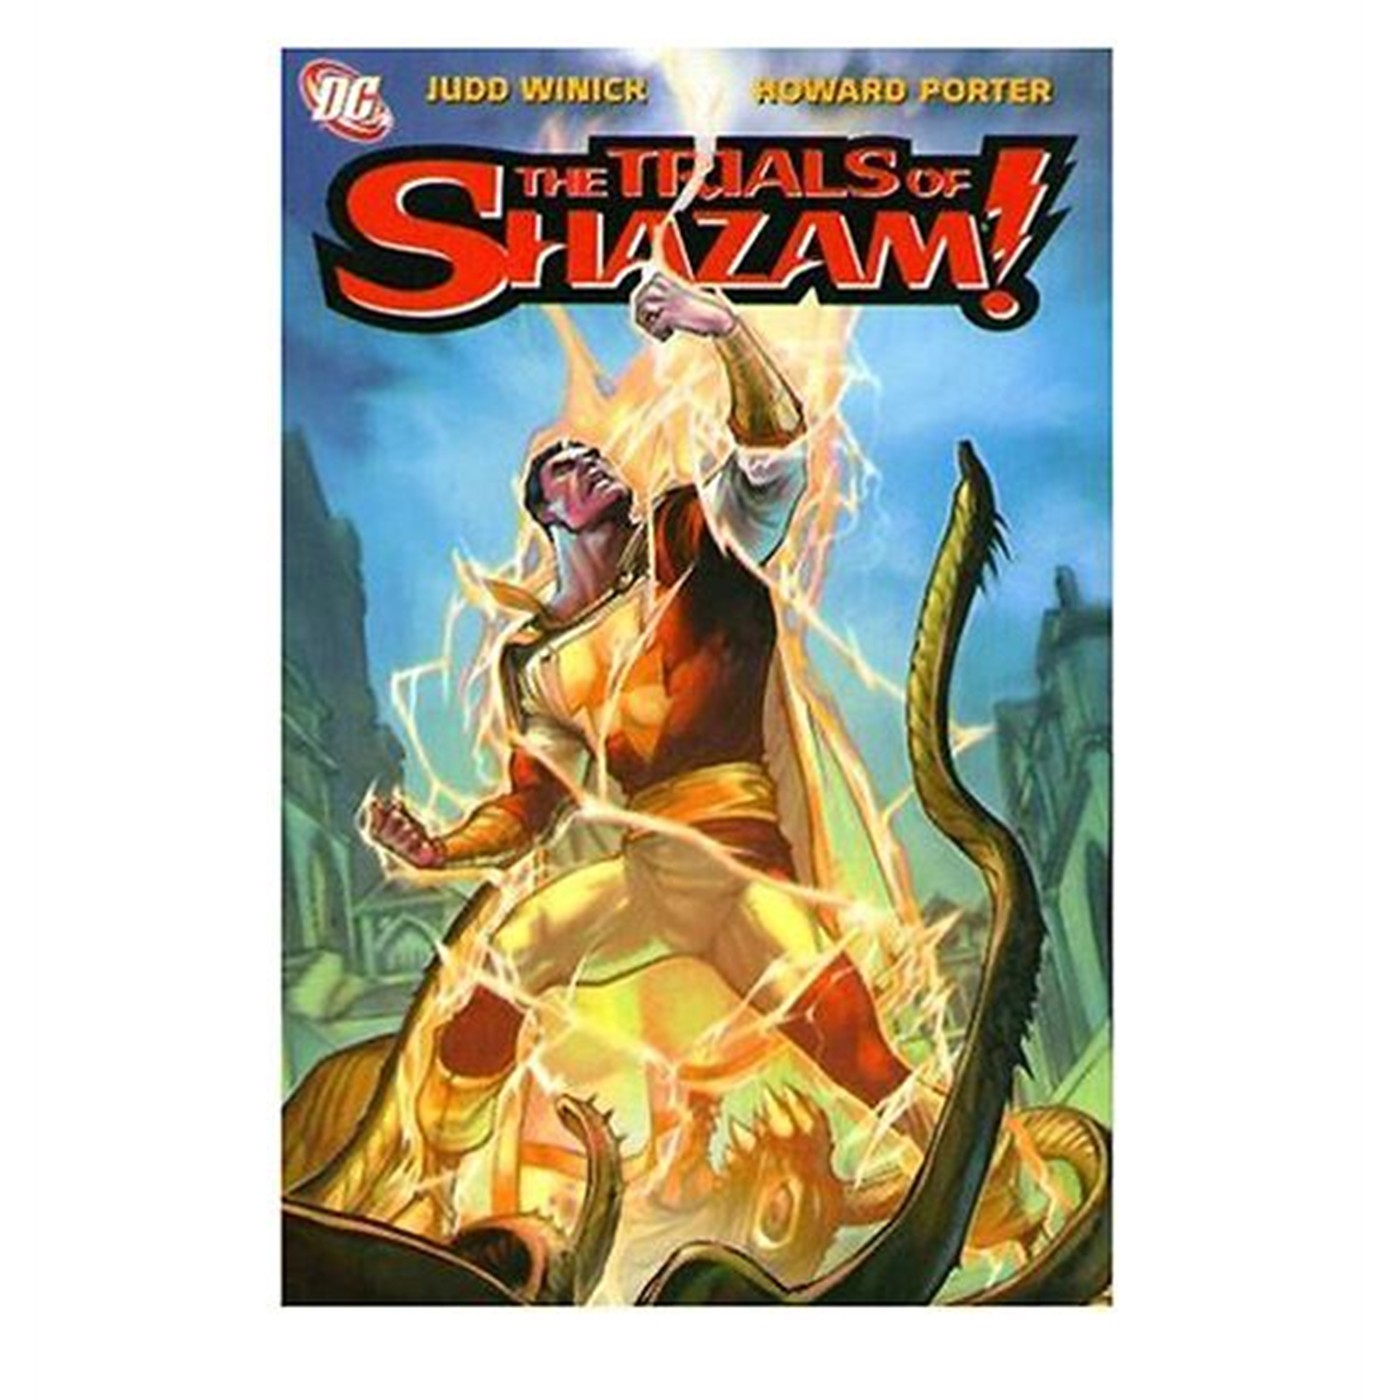 The Trails of Shazam Vol 1 Trade Paperback